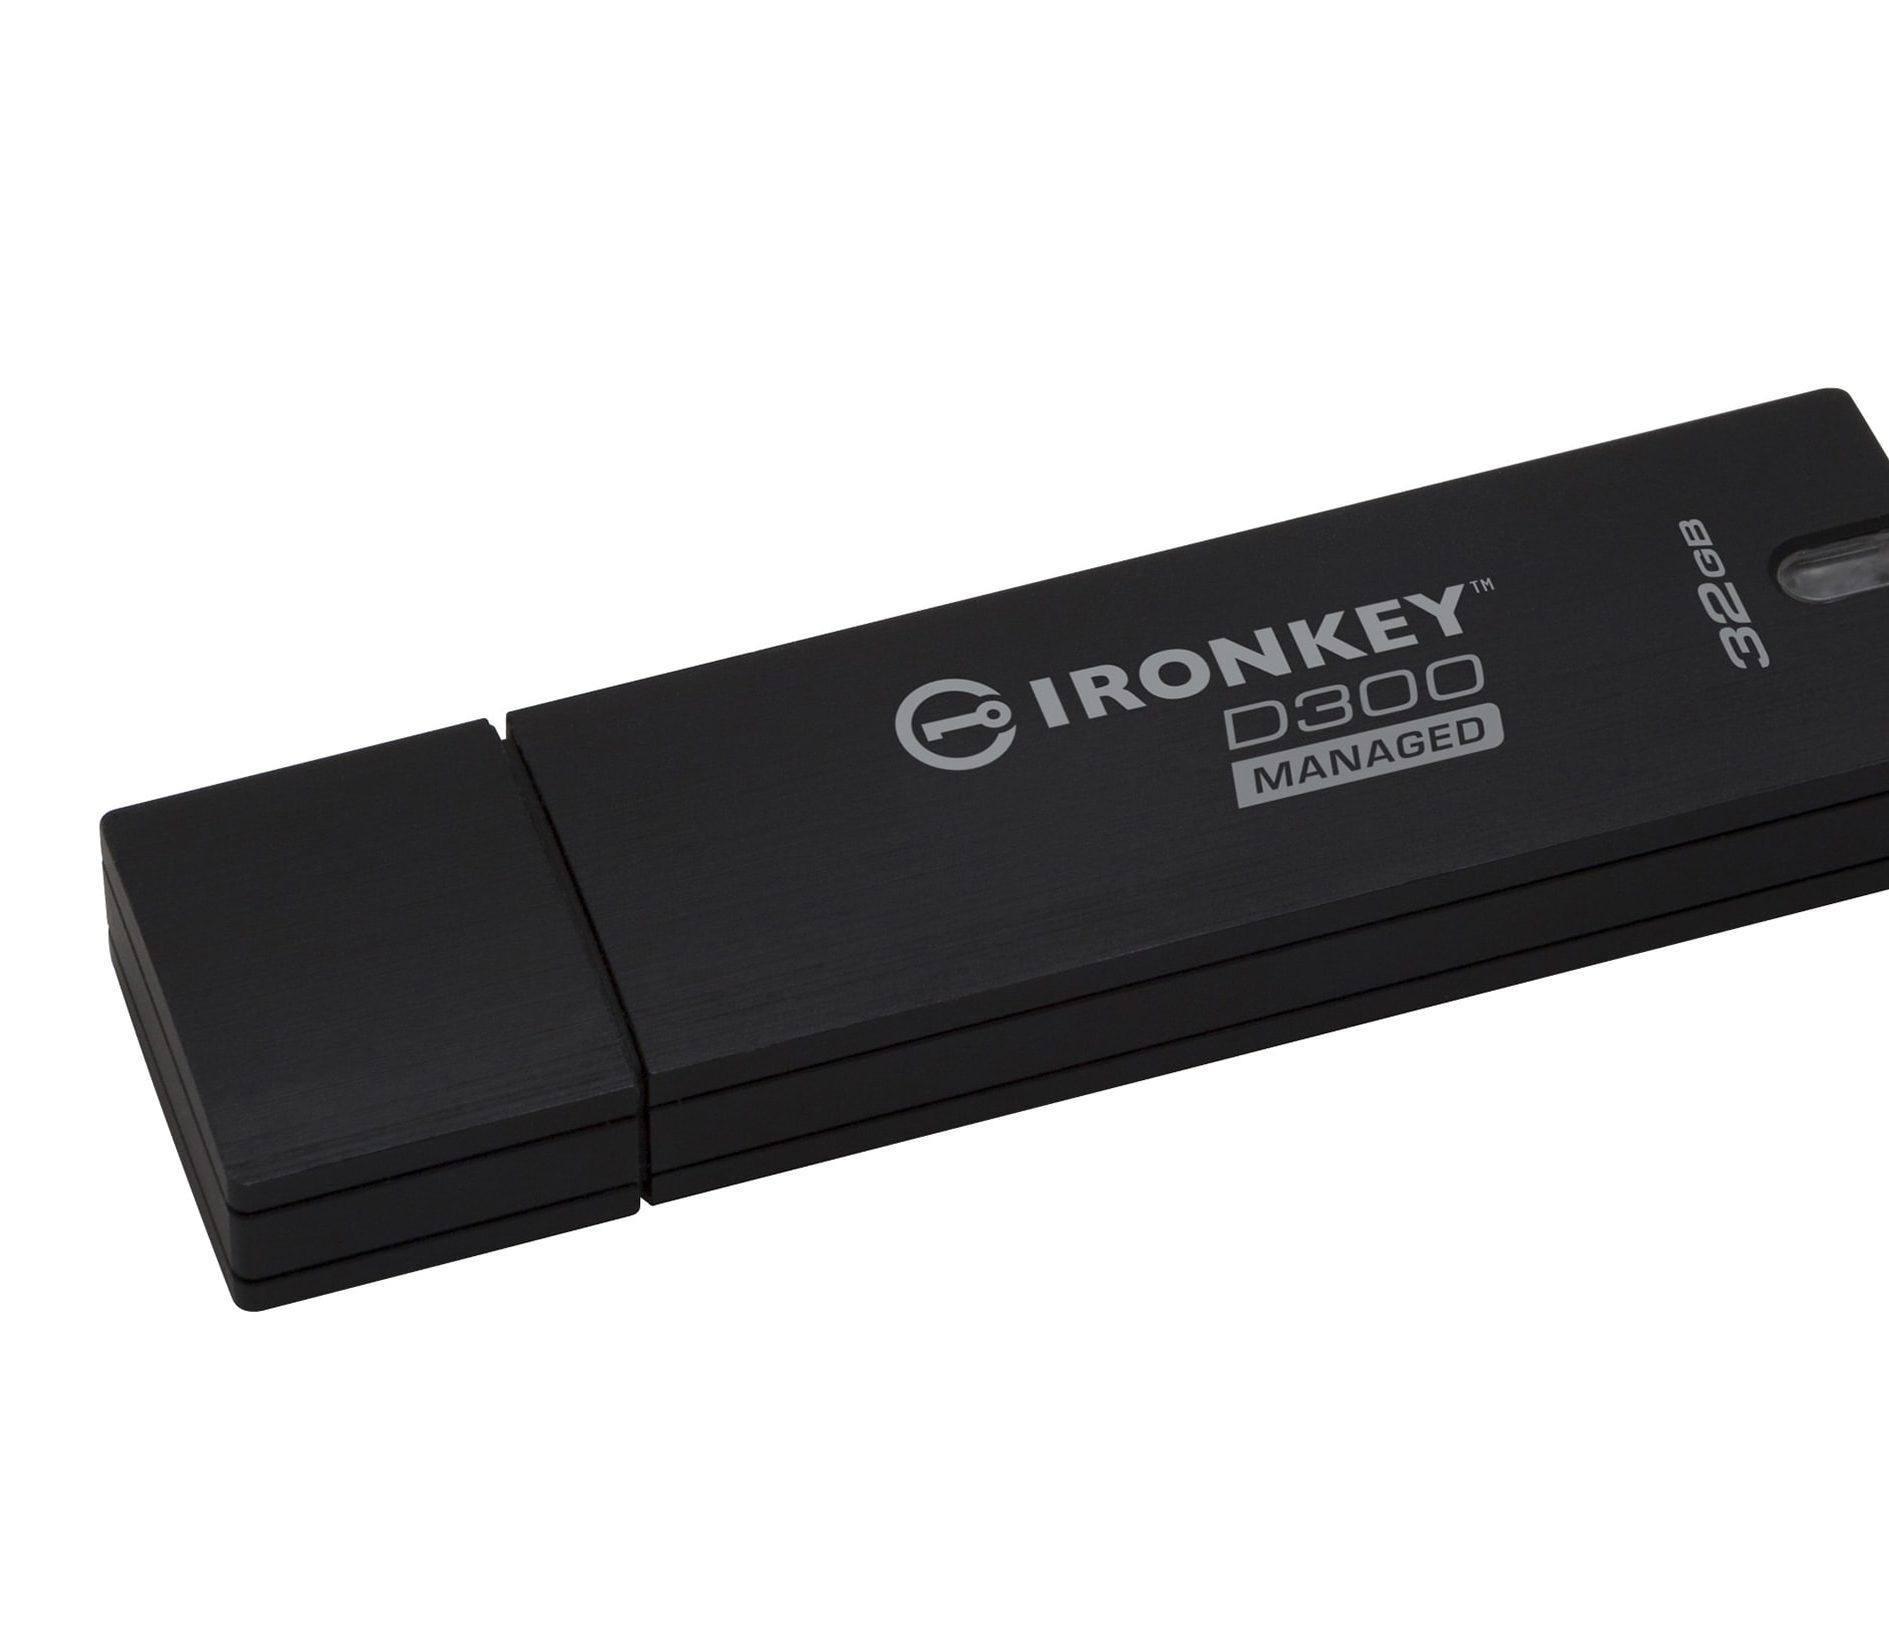 ironkey d300 encrypted usb flash drive